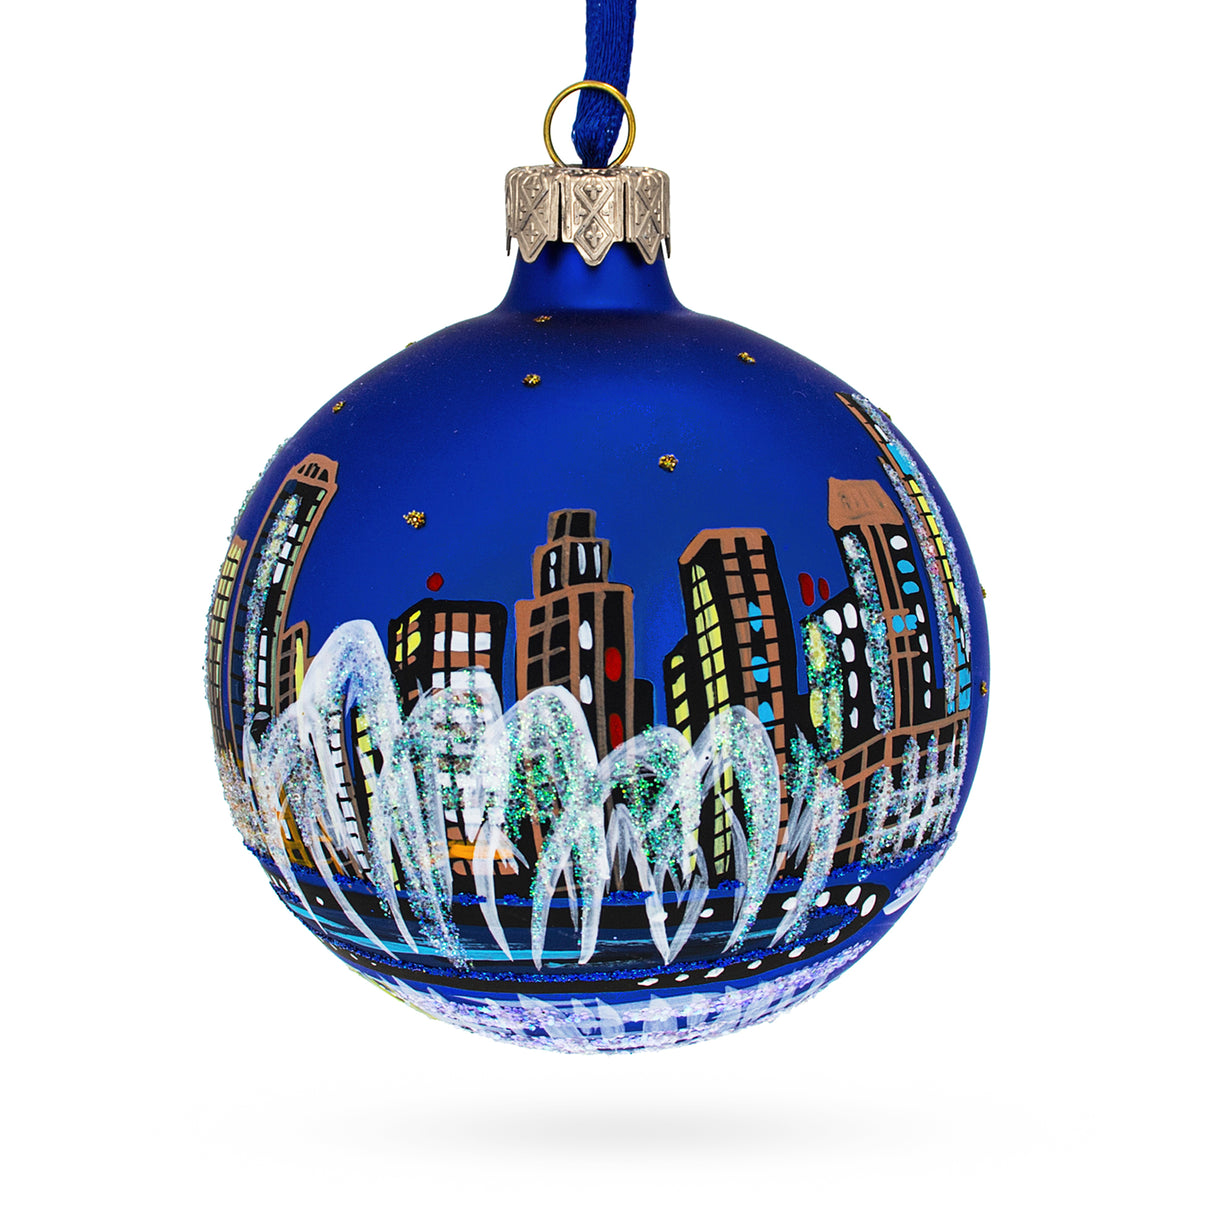 Glass The Dubai Fountain, United Arab Emirates Glass Ball Christmas Ornament 4 Inches in Multi color Round